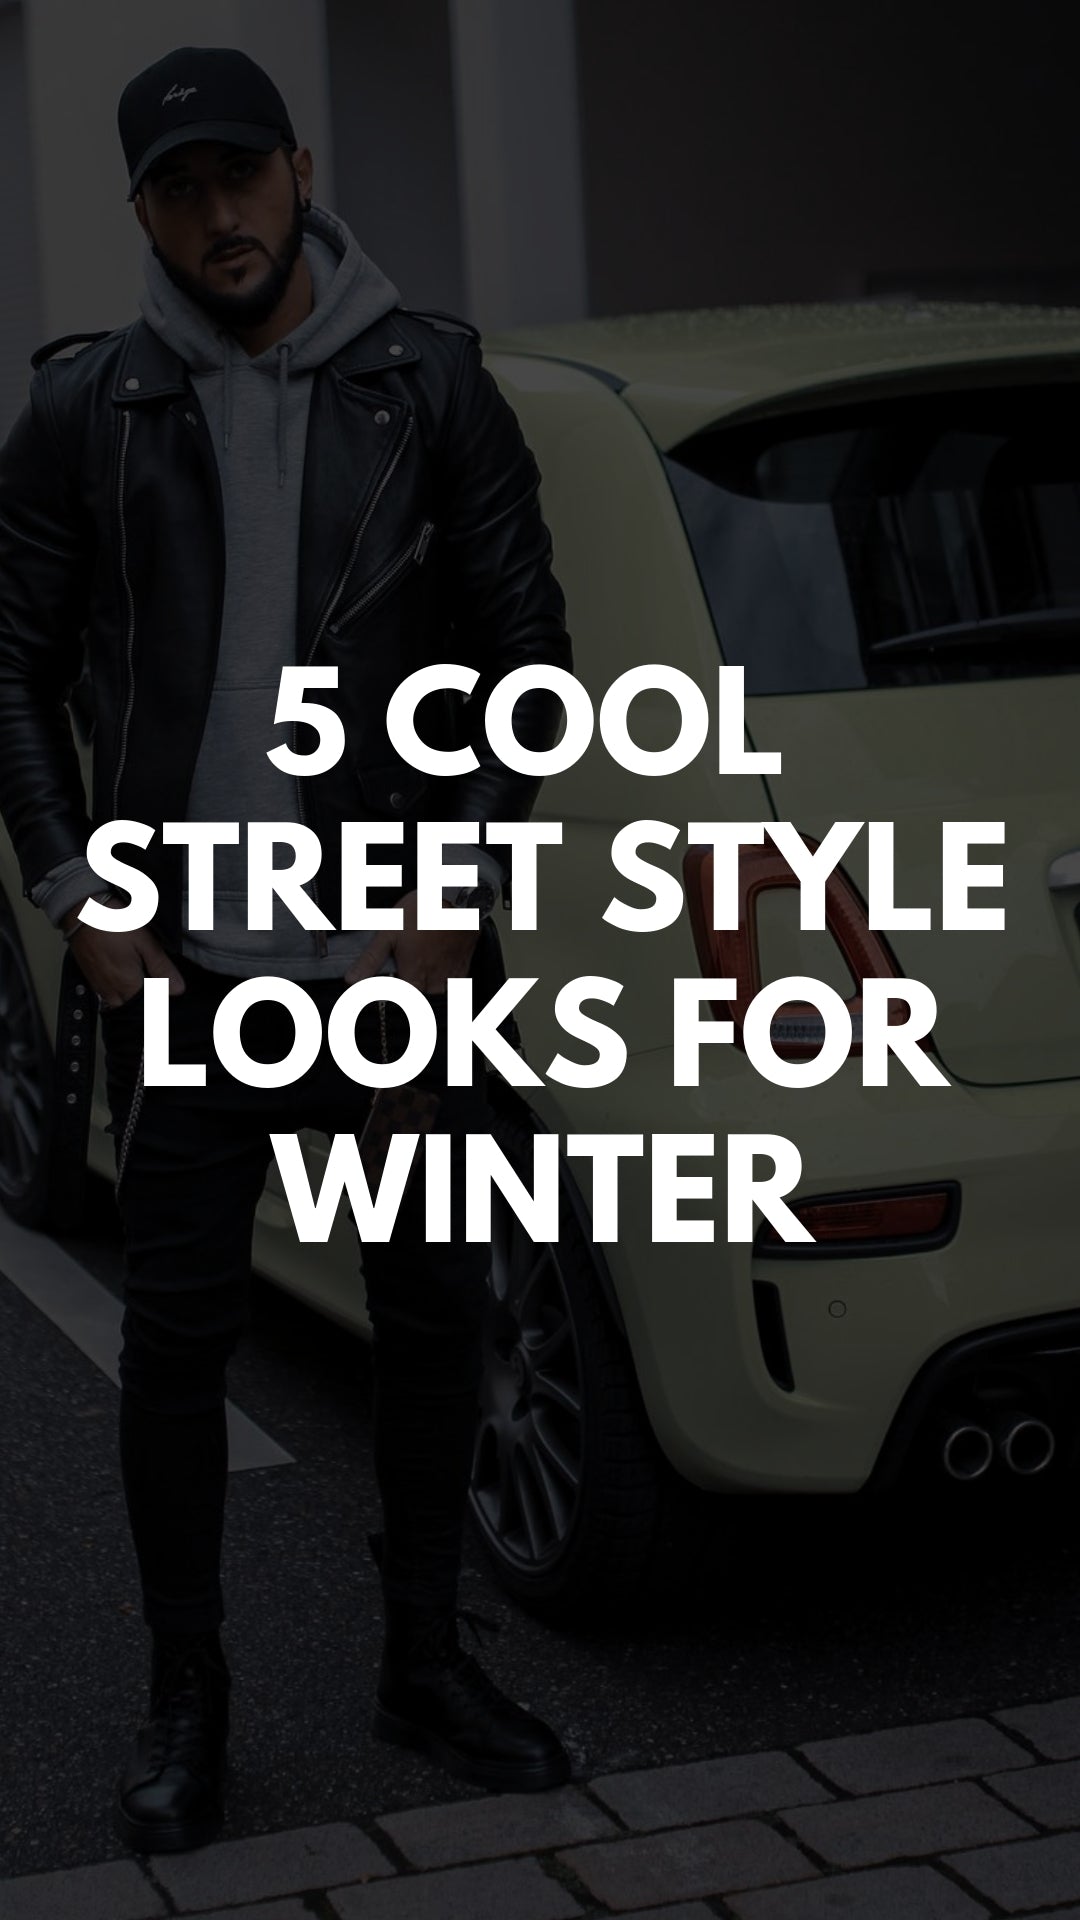 5 Coolest Street Style Looks For Winter #winterfashion #fallfashion #streetstyle #mensfashion